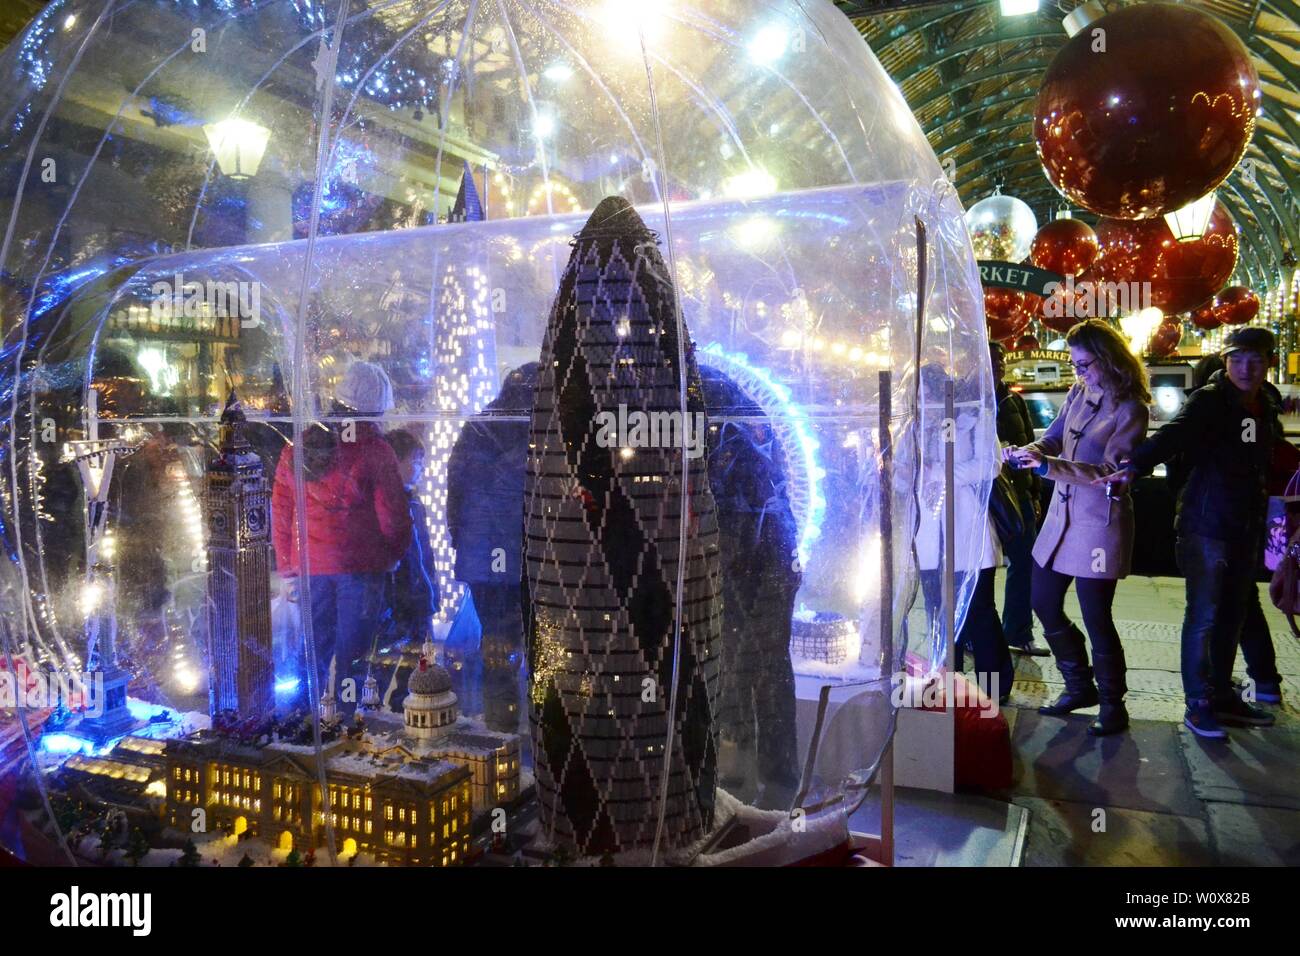 London/UK - November 27, 2013: People enjoying models of London famous landmarks exposed in the Covent Garden Apple market decorated for Christmas. Stock Photo